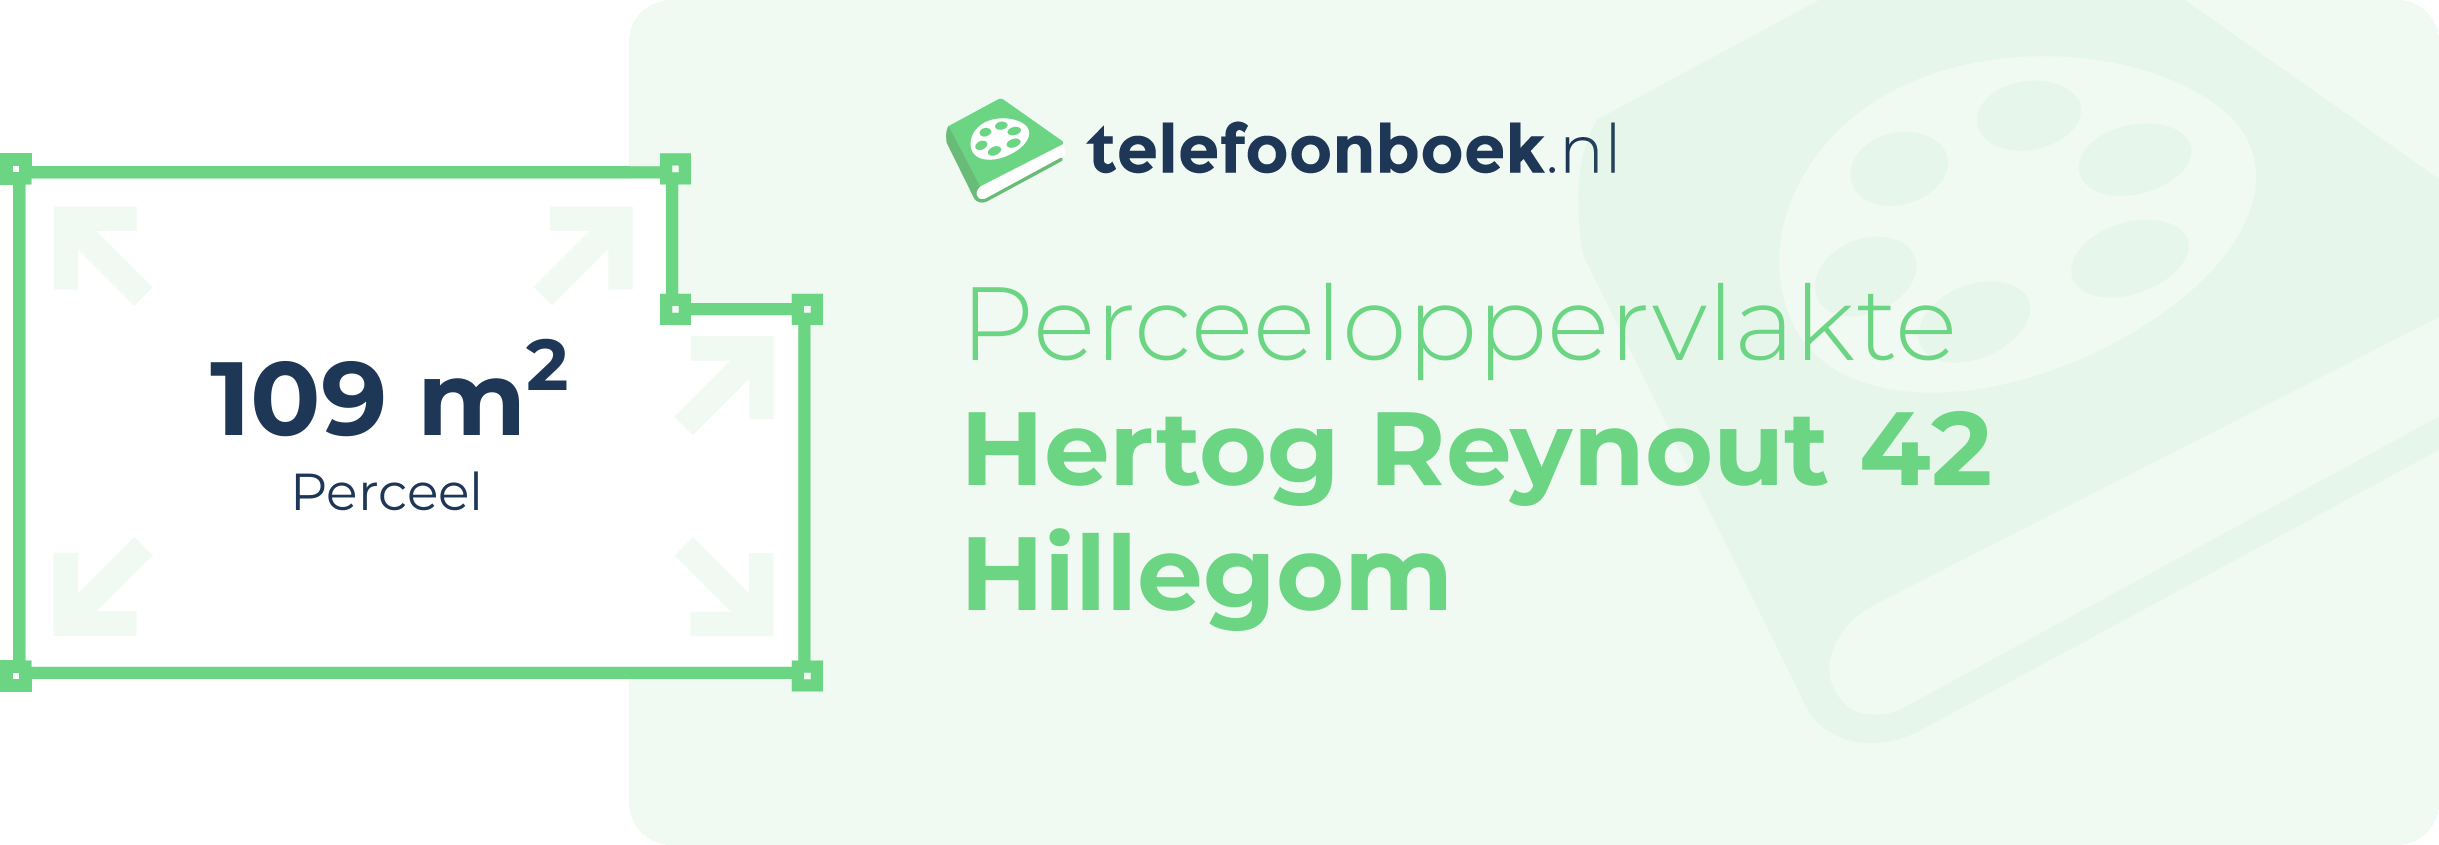 Perceeloppervlakte Hertog Reynout 42 Hillegom